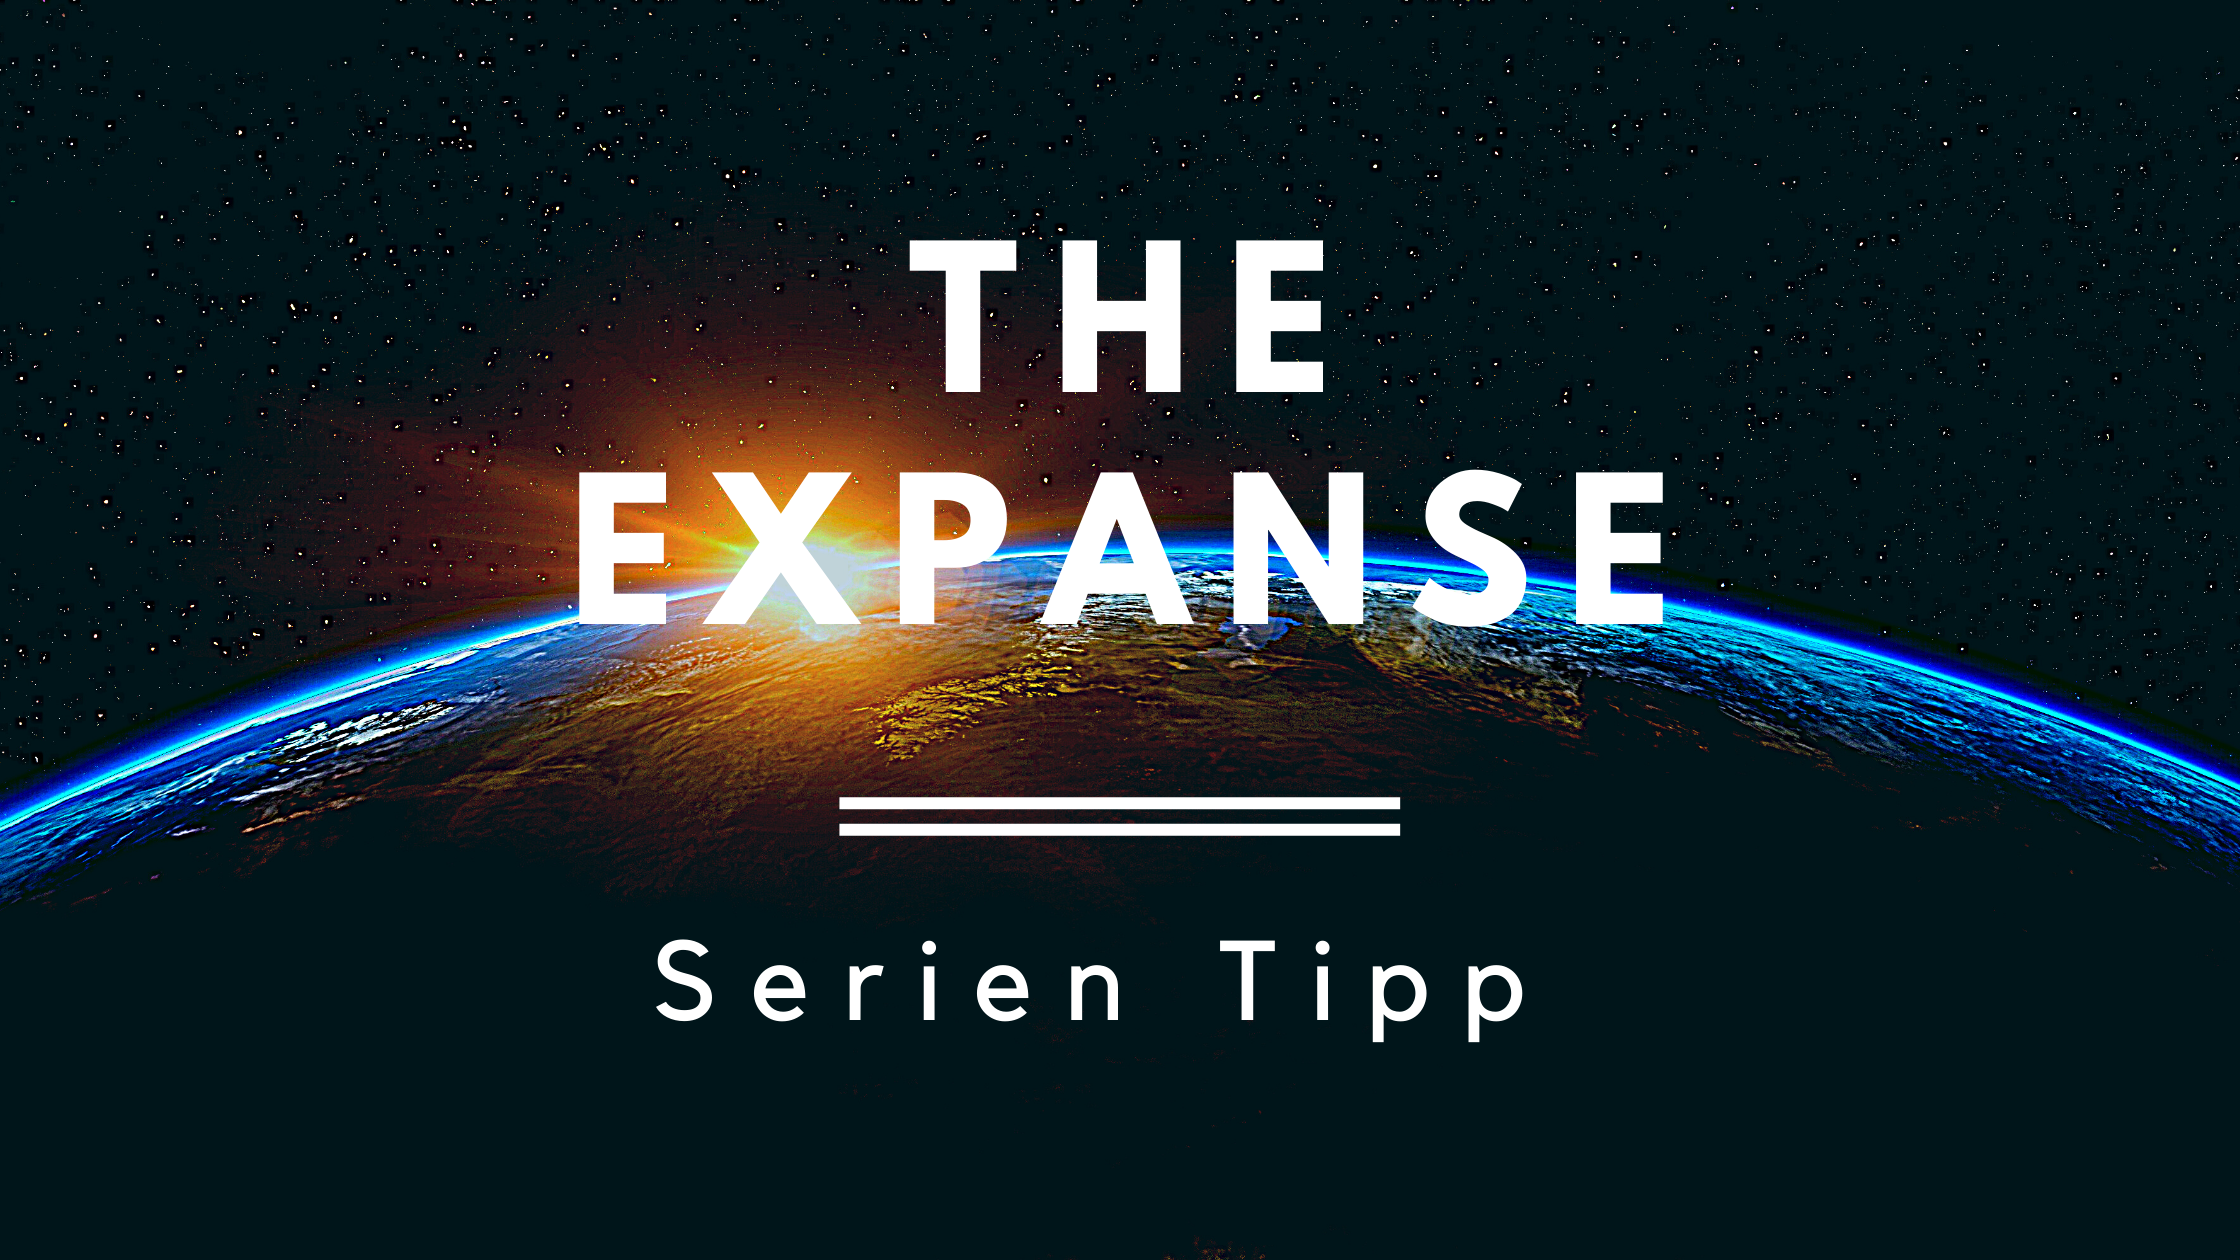 The Expanse Serie Tipp Amazon